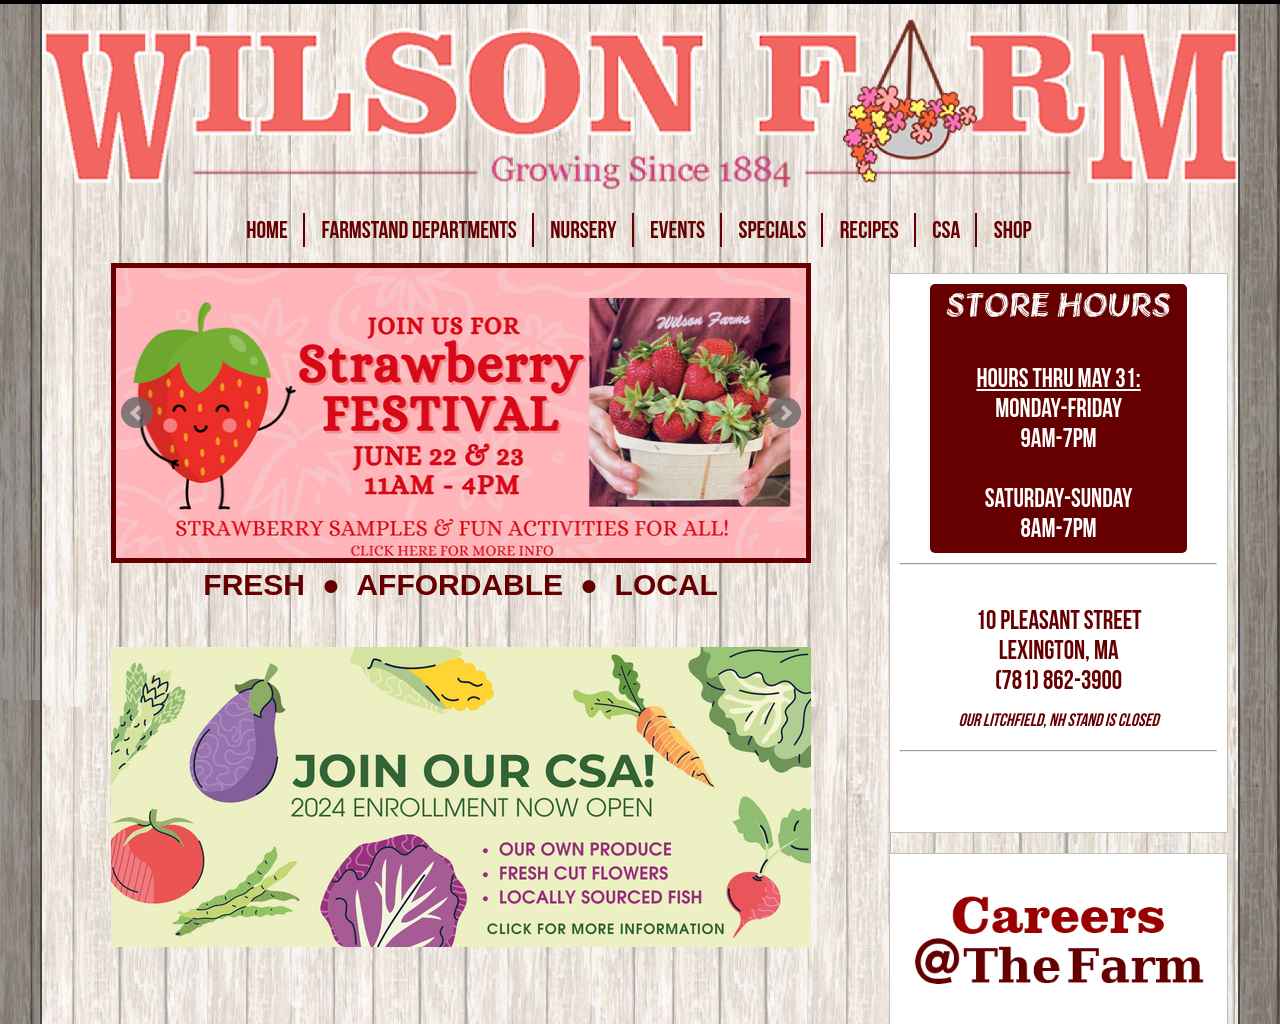 wilsonfarm.com